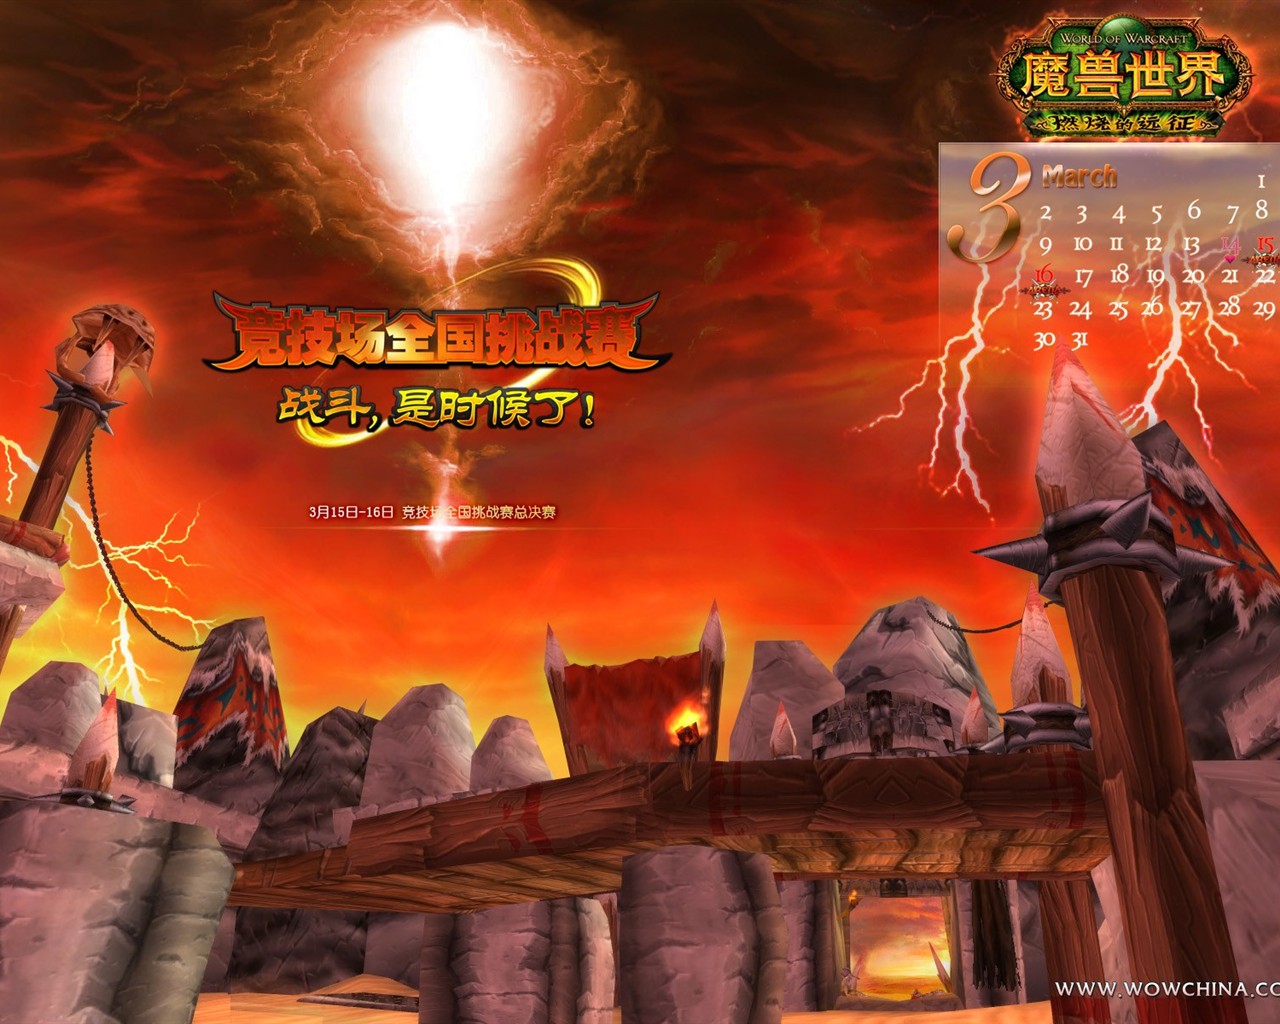 World of Warcraft: fondo de pantalla oficial de The Burning Crusade (2) #16 - 1280x1024